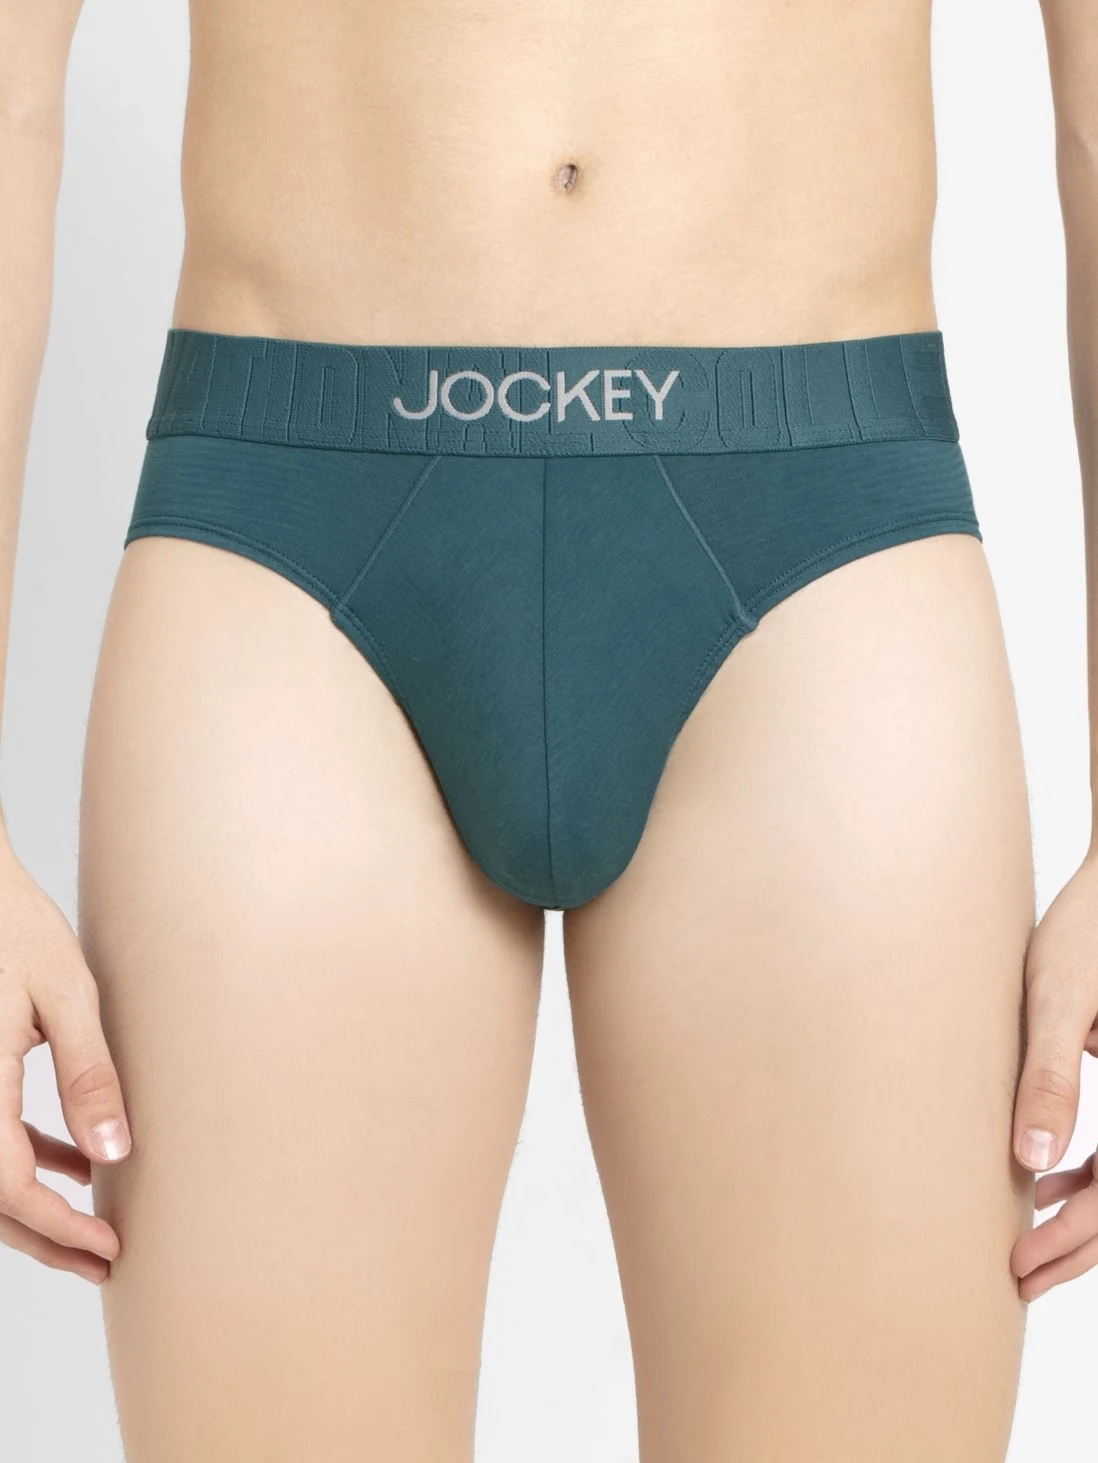 Jockey Breif #IC 31 – Lachic Innerwear and Cosmetics